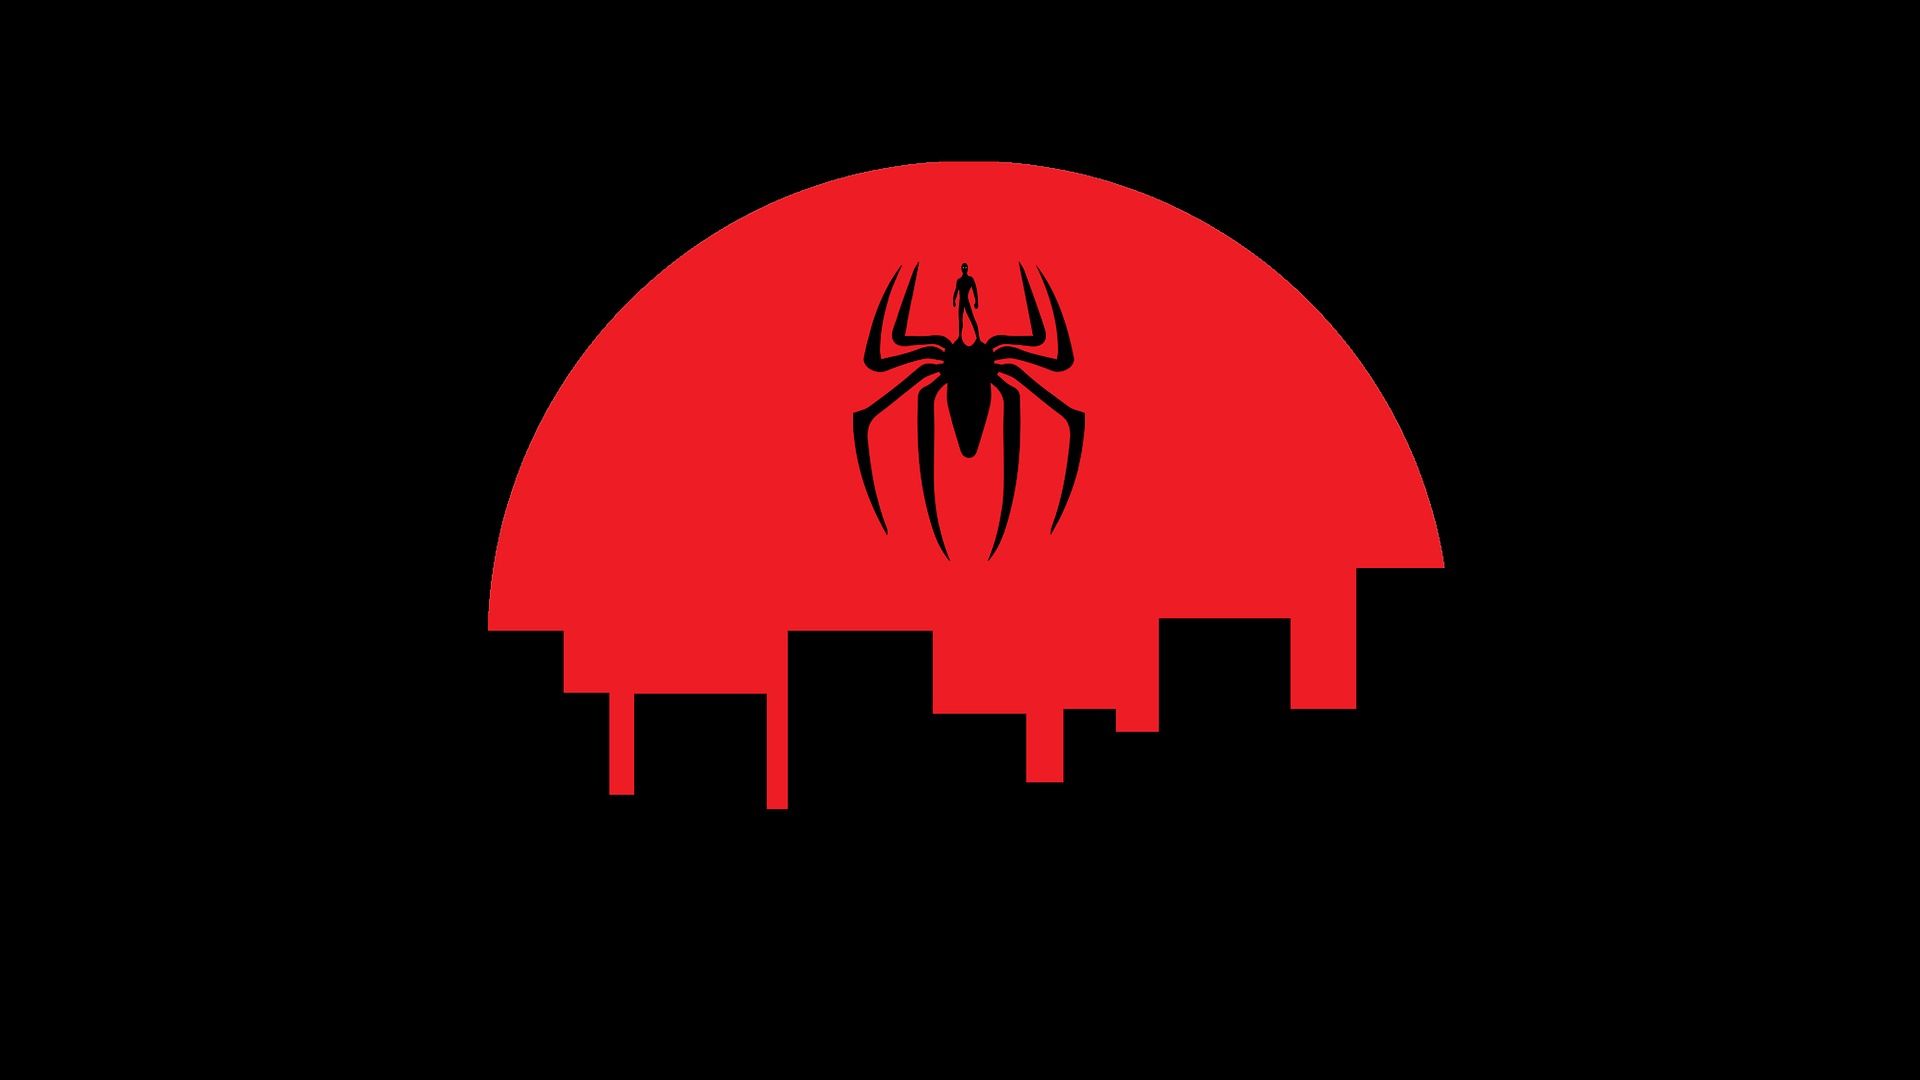 Spider Man Marvel Cinematic Universe Minimalism Simple Background Marvel Comics Logo Wallpaper:1920x1080